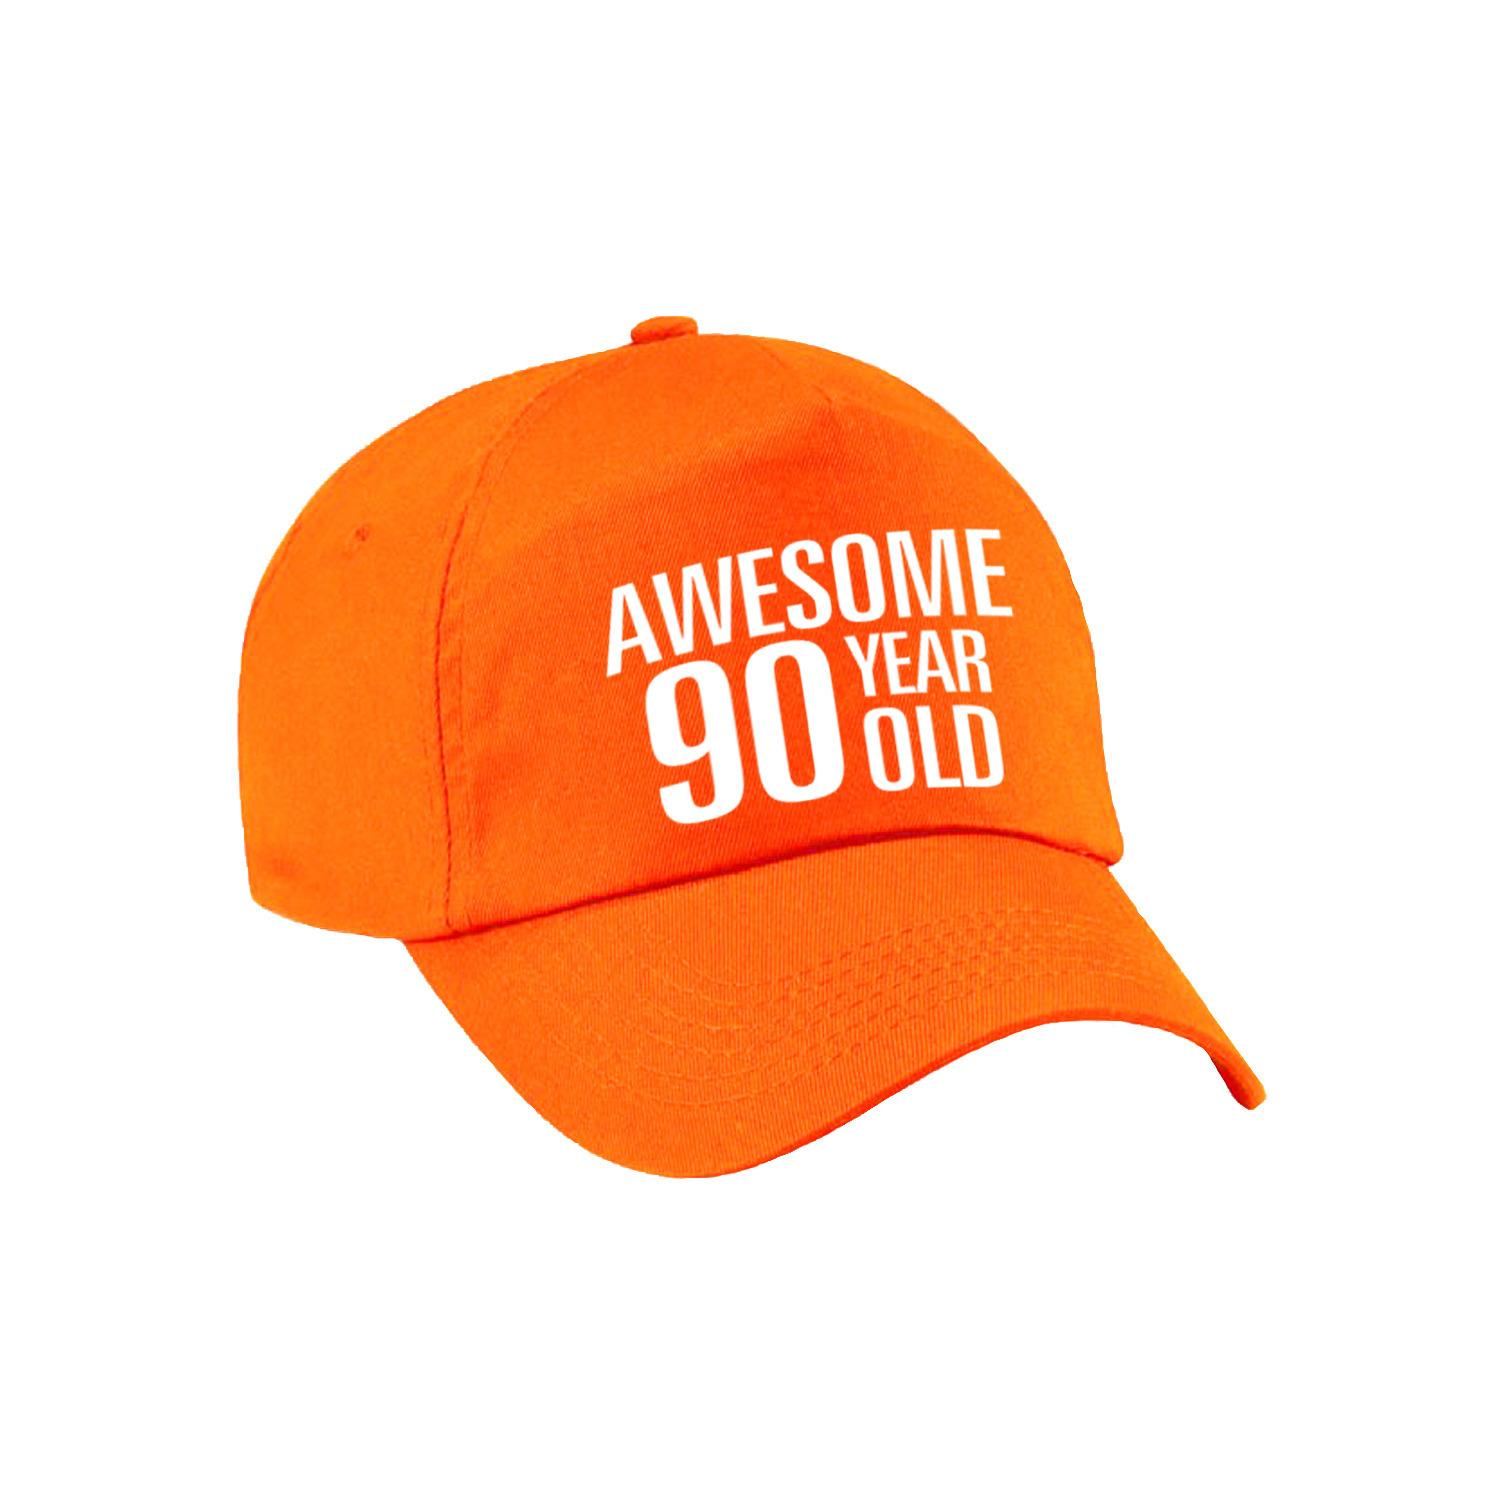 Awesome 90 year old verjaardag pet / cap oranje voor dames en heren